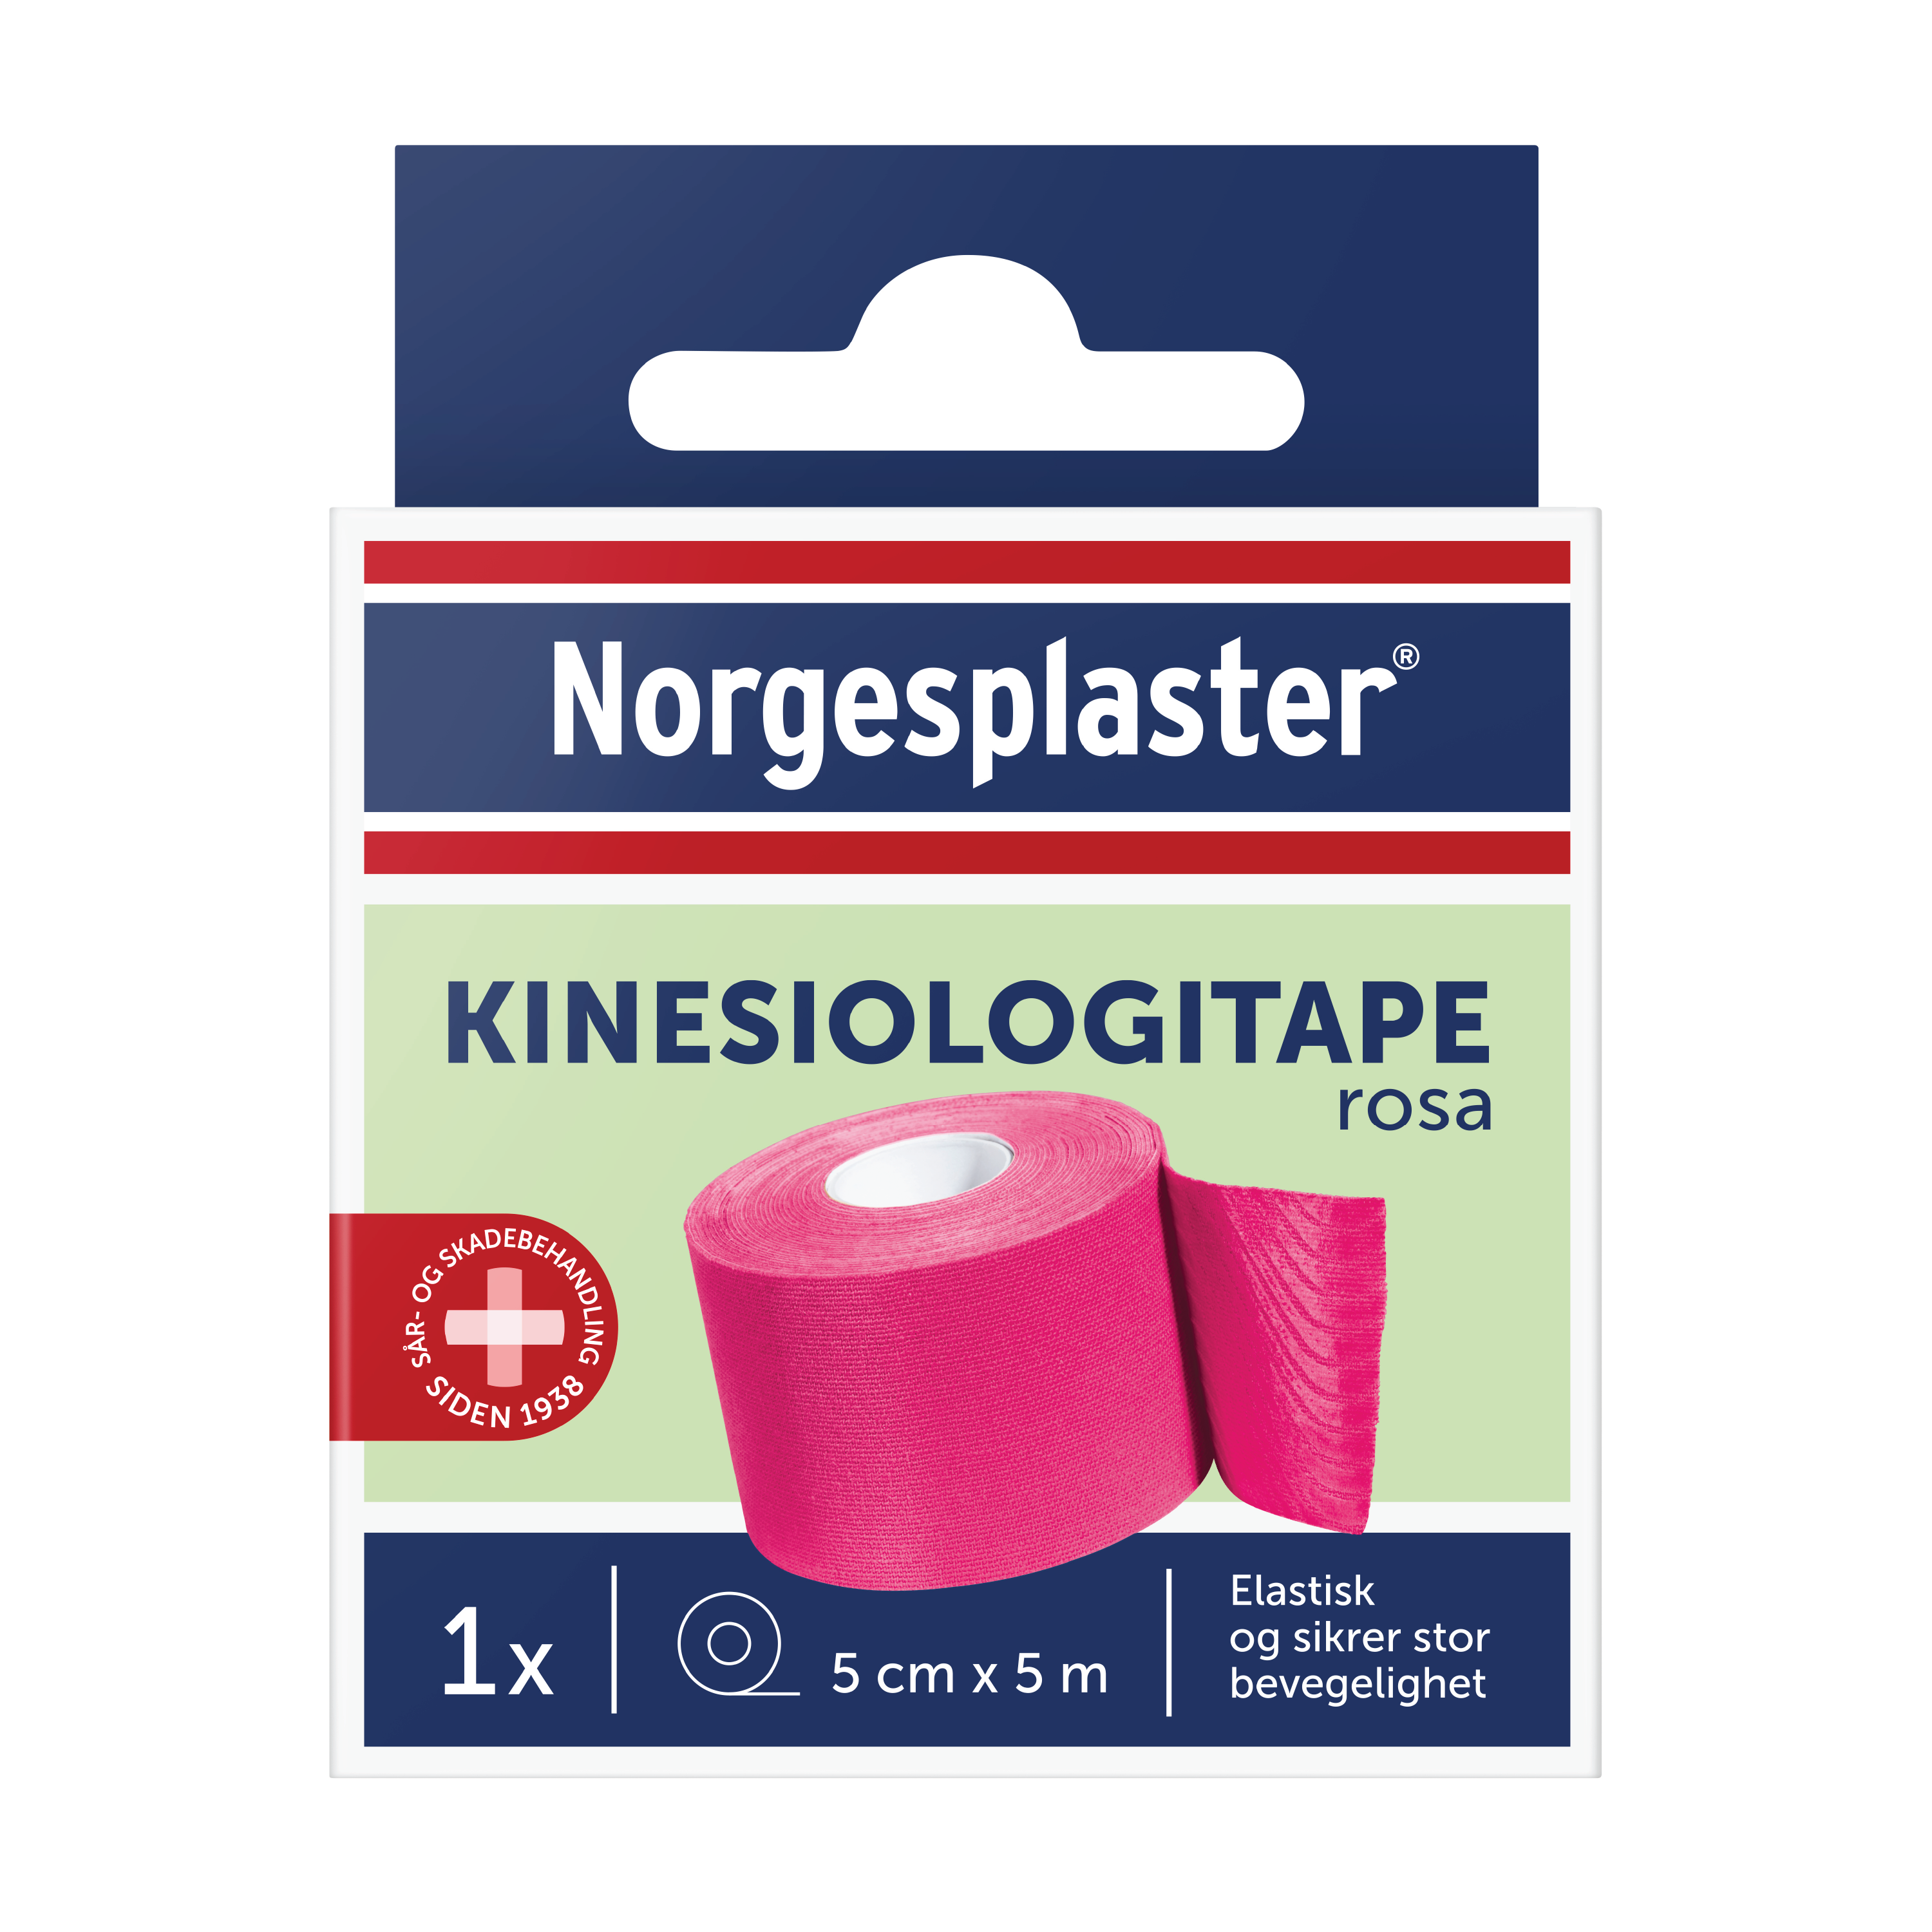 Norgesplaster Kinesiologitape, 5 cm x 5 m, rosa, 1 stk.